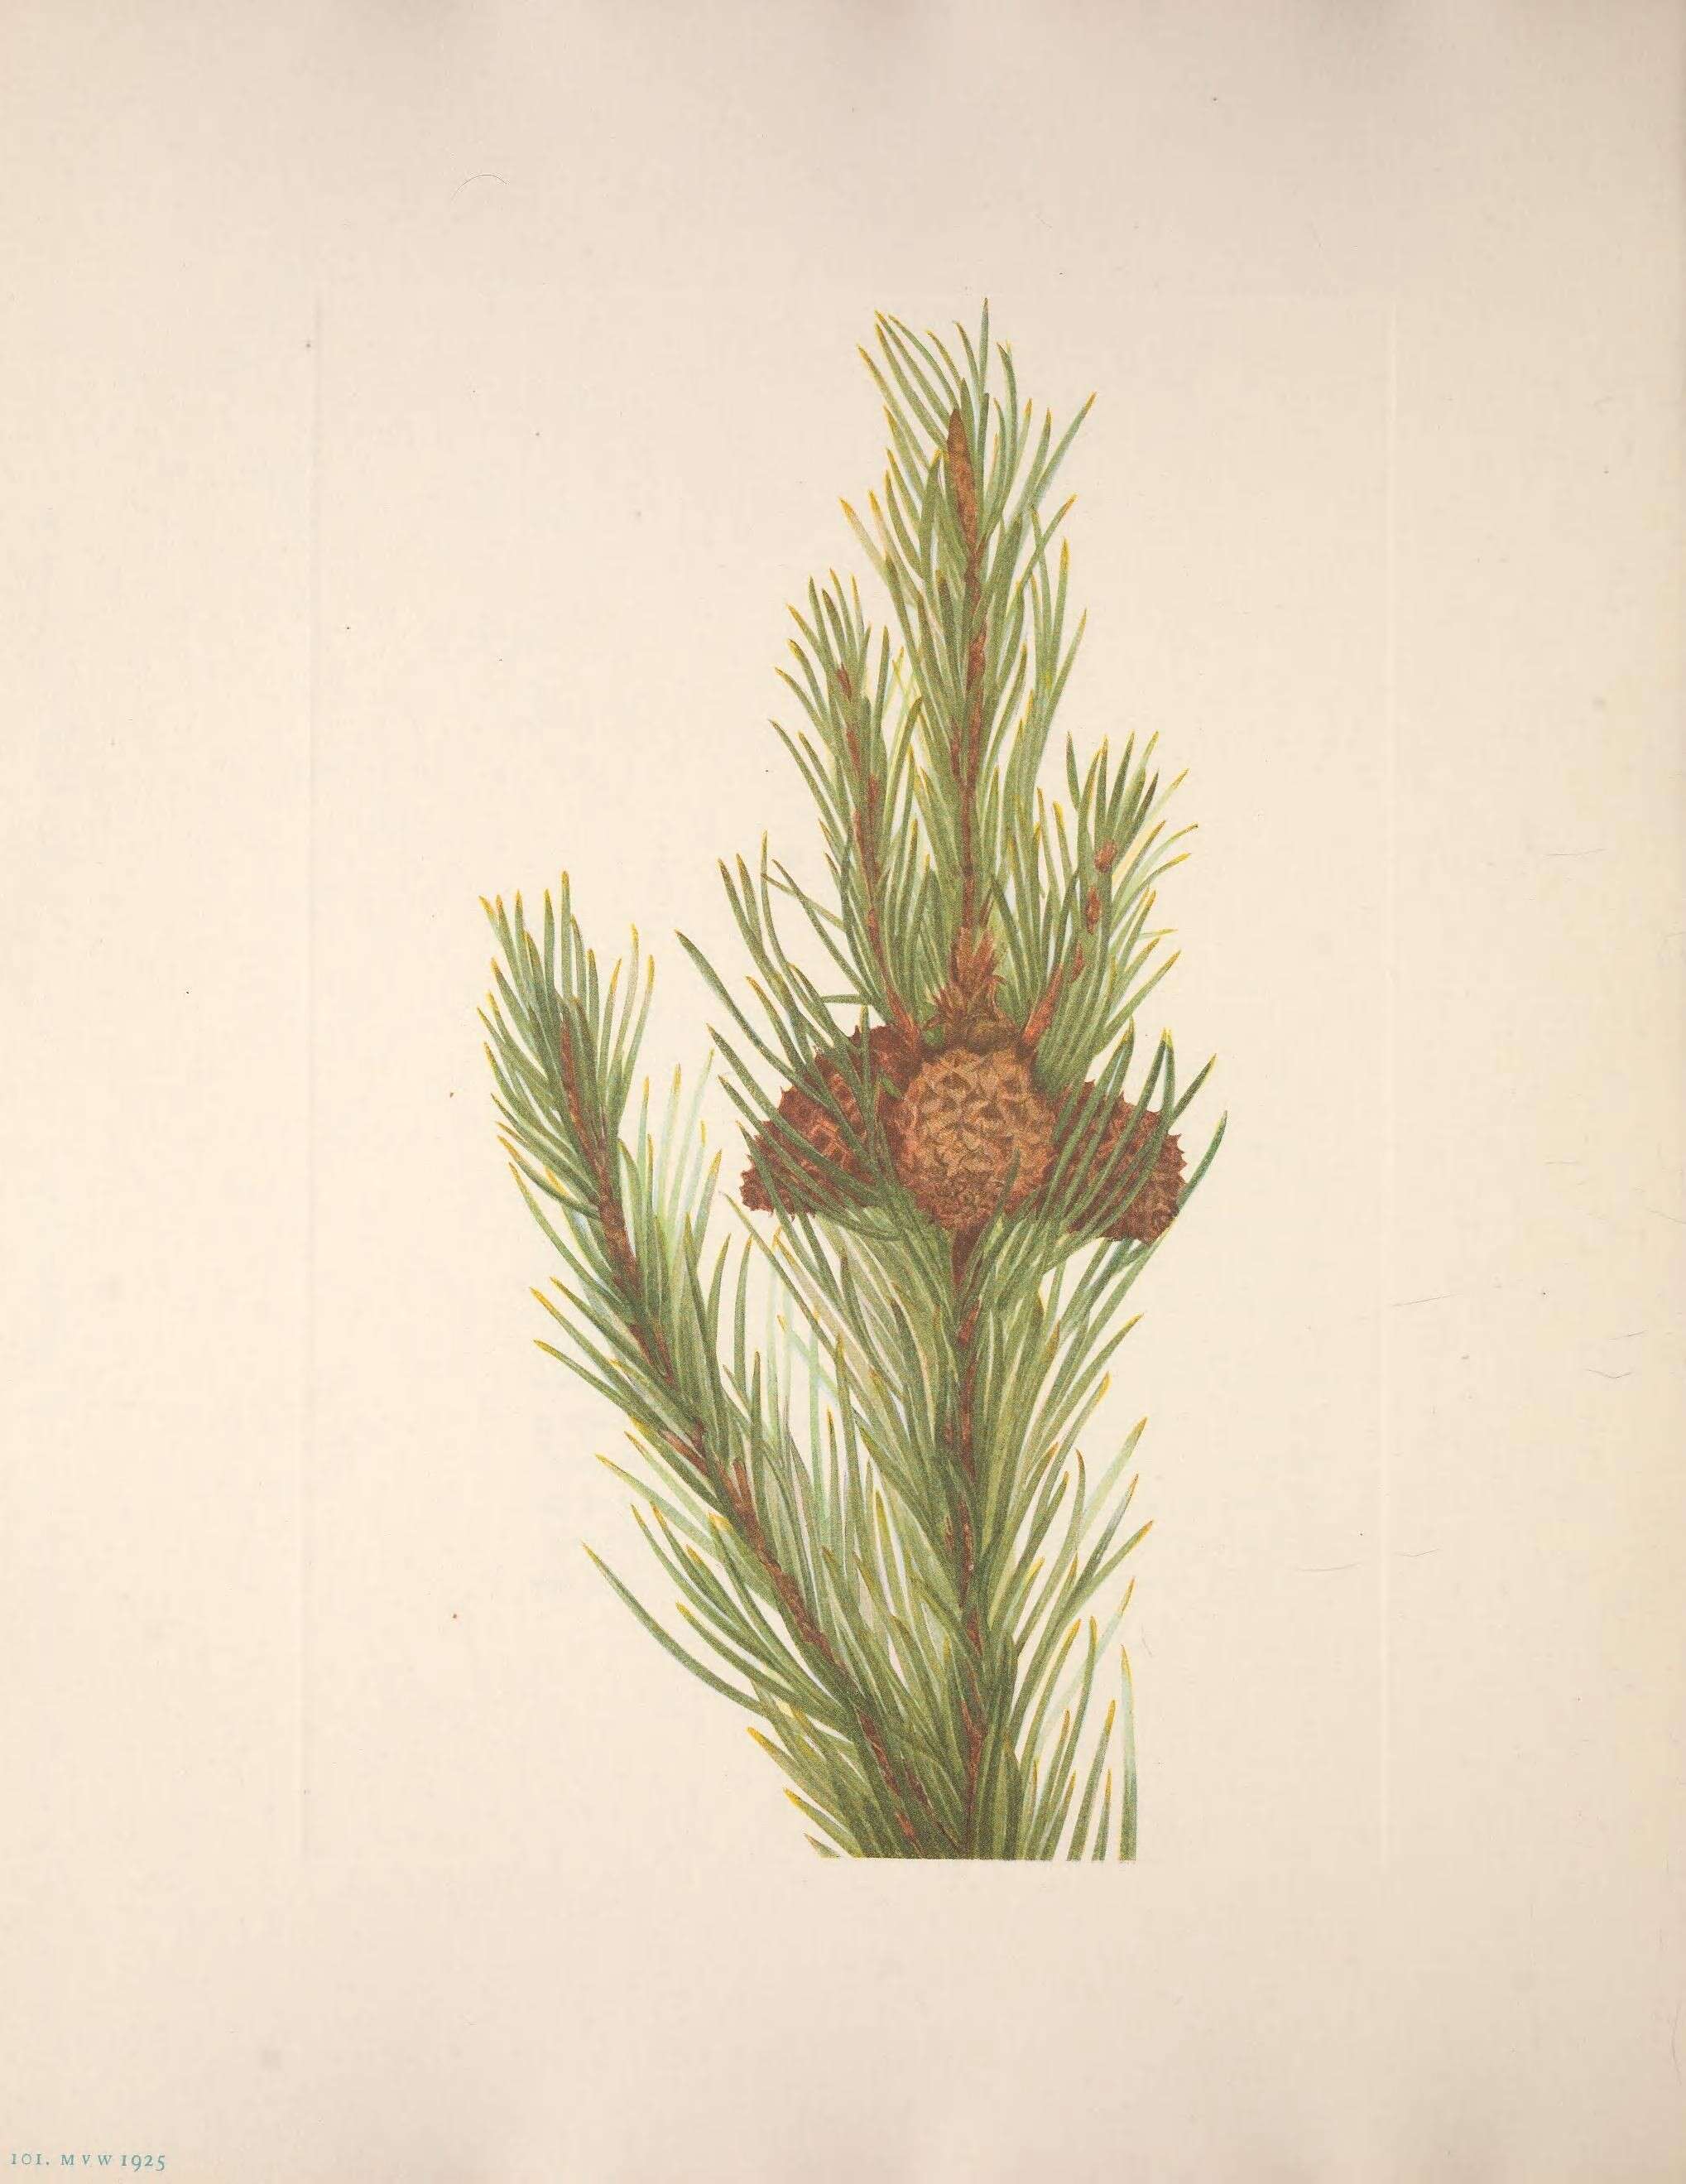 Pinus contorta var. murrayana (Balf.) Engelm. resmi